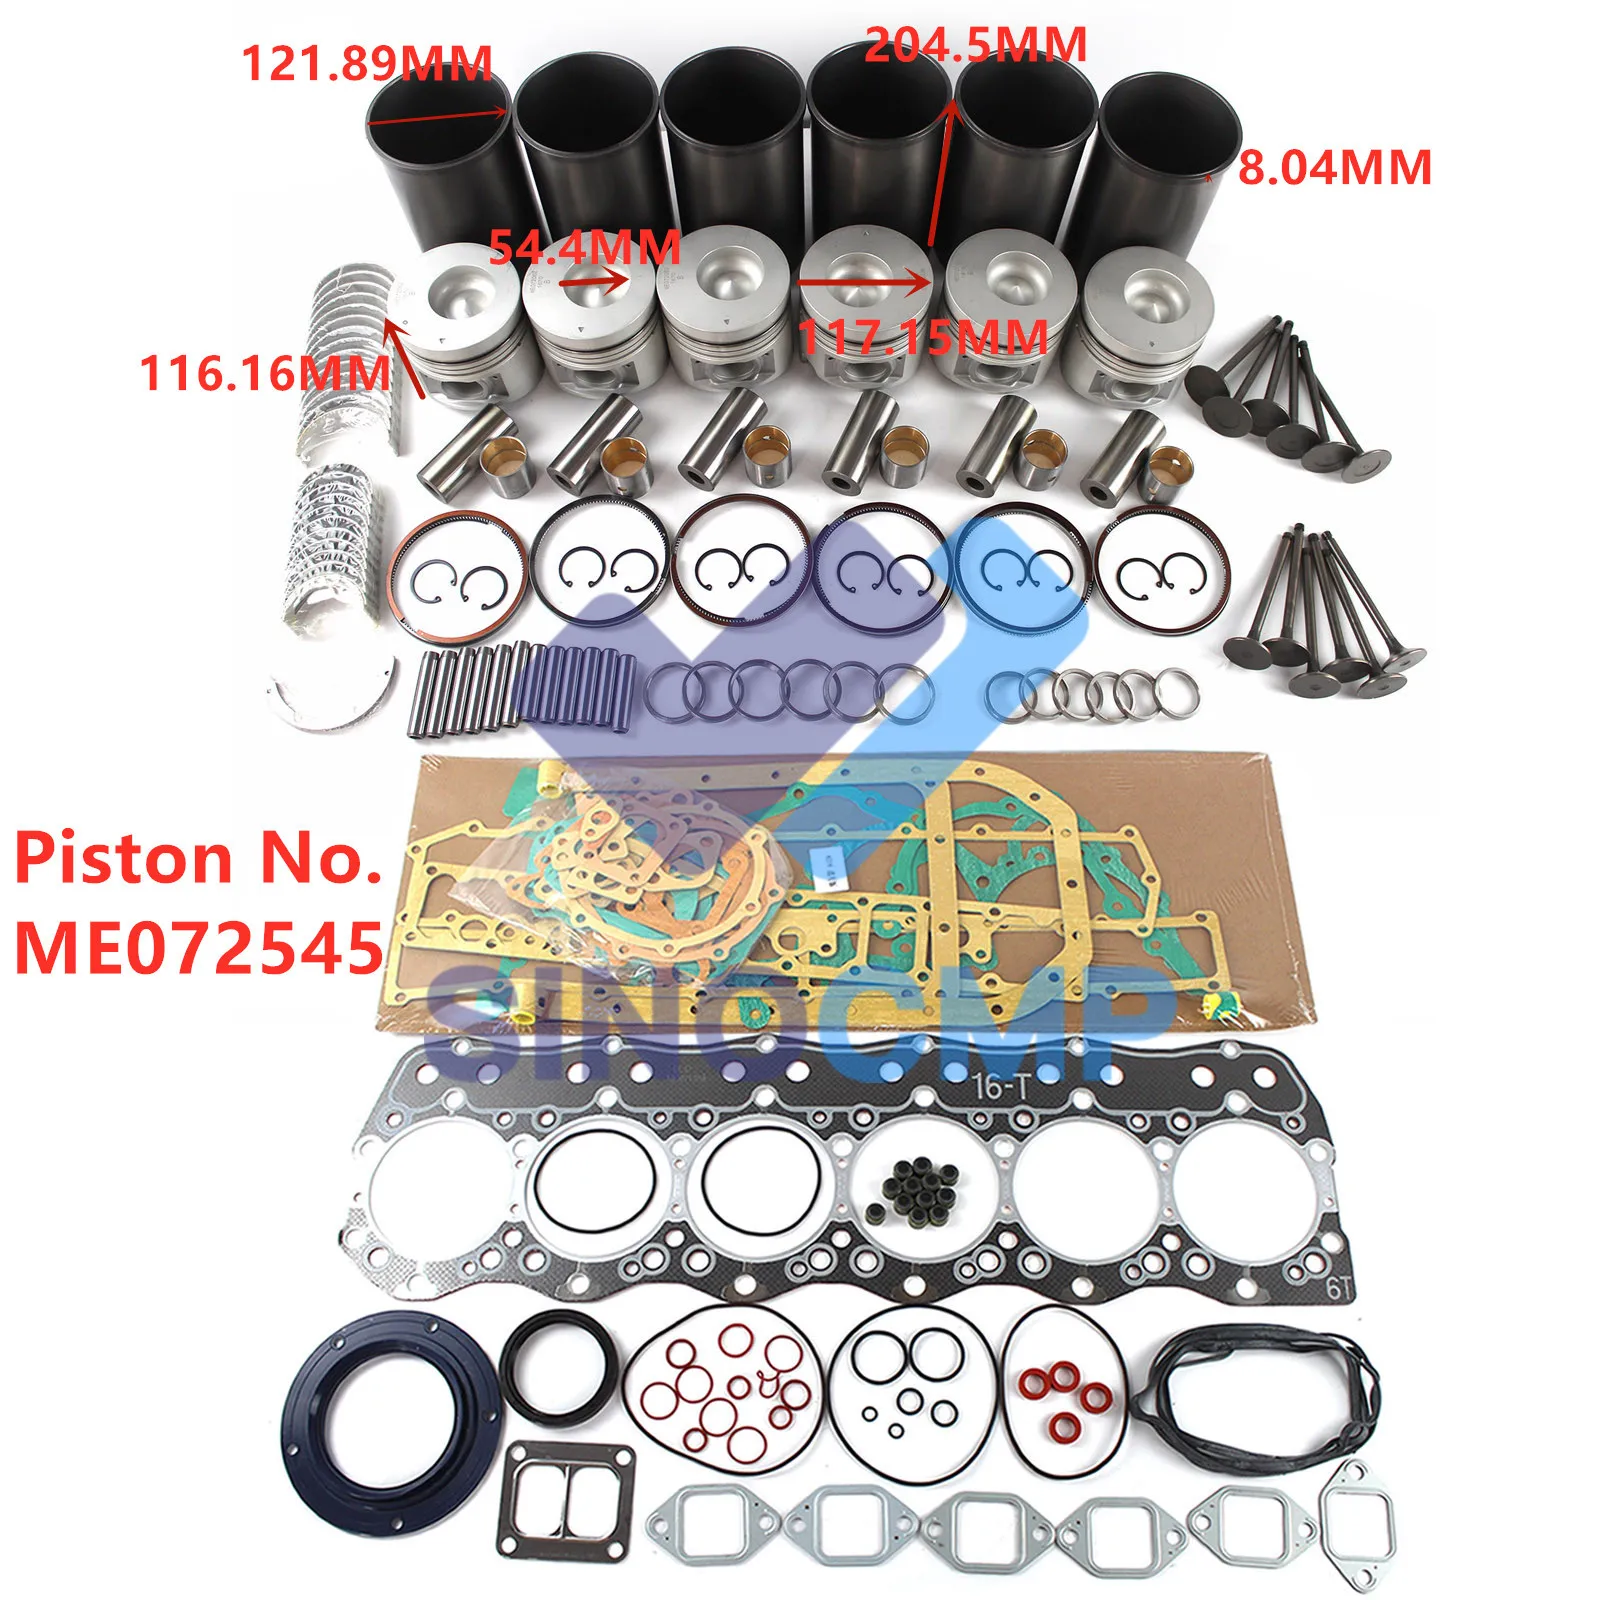 

6D16 6D16T Engine Rebuild Kit For Hyundai Kobelco Forklift Excavator Piston no ME072545